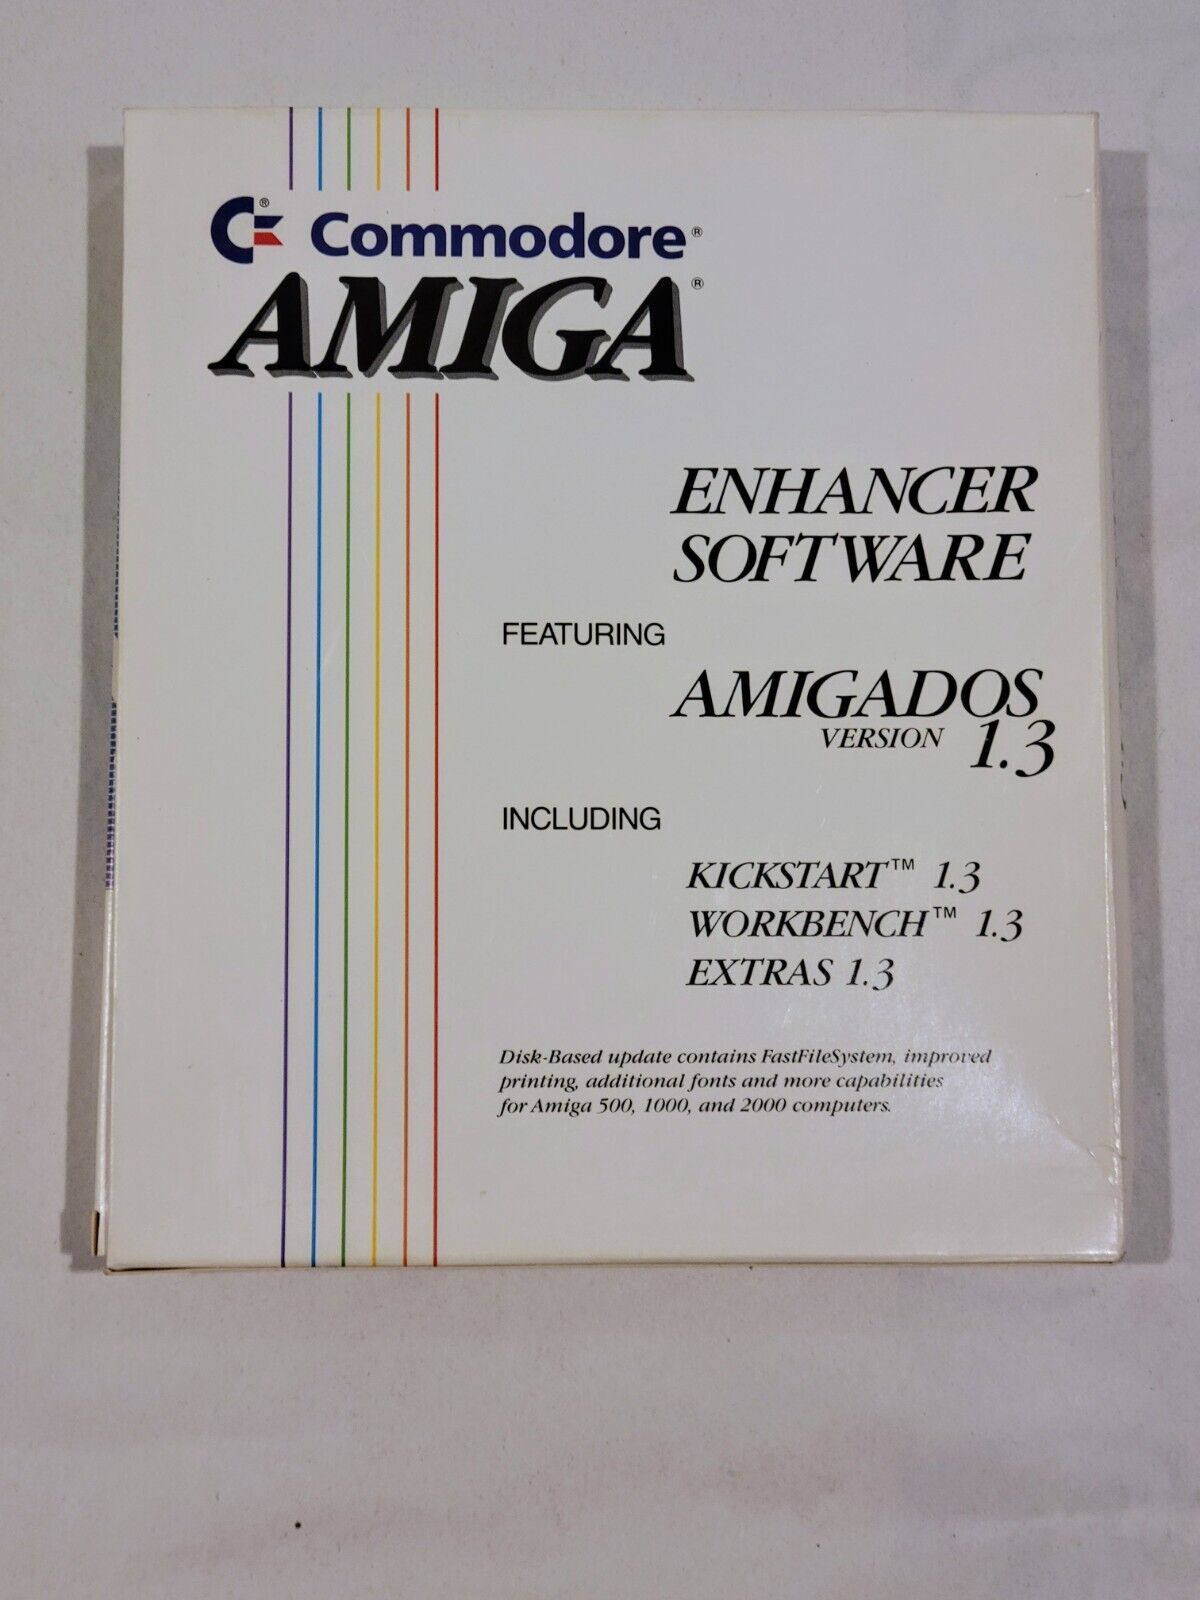 VINTAGE Amiga Enhancer Software Amigados V1.3 With Manual